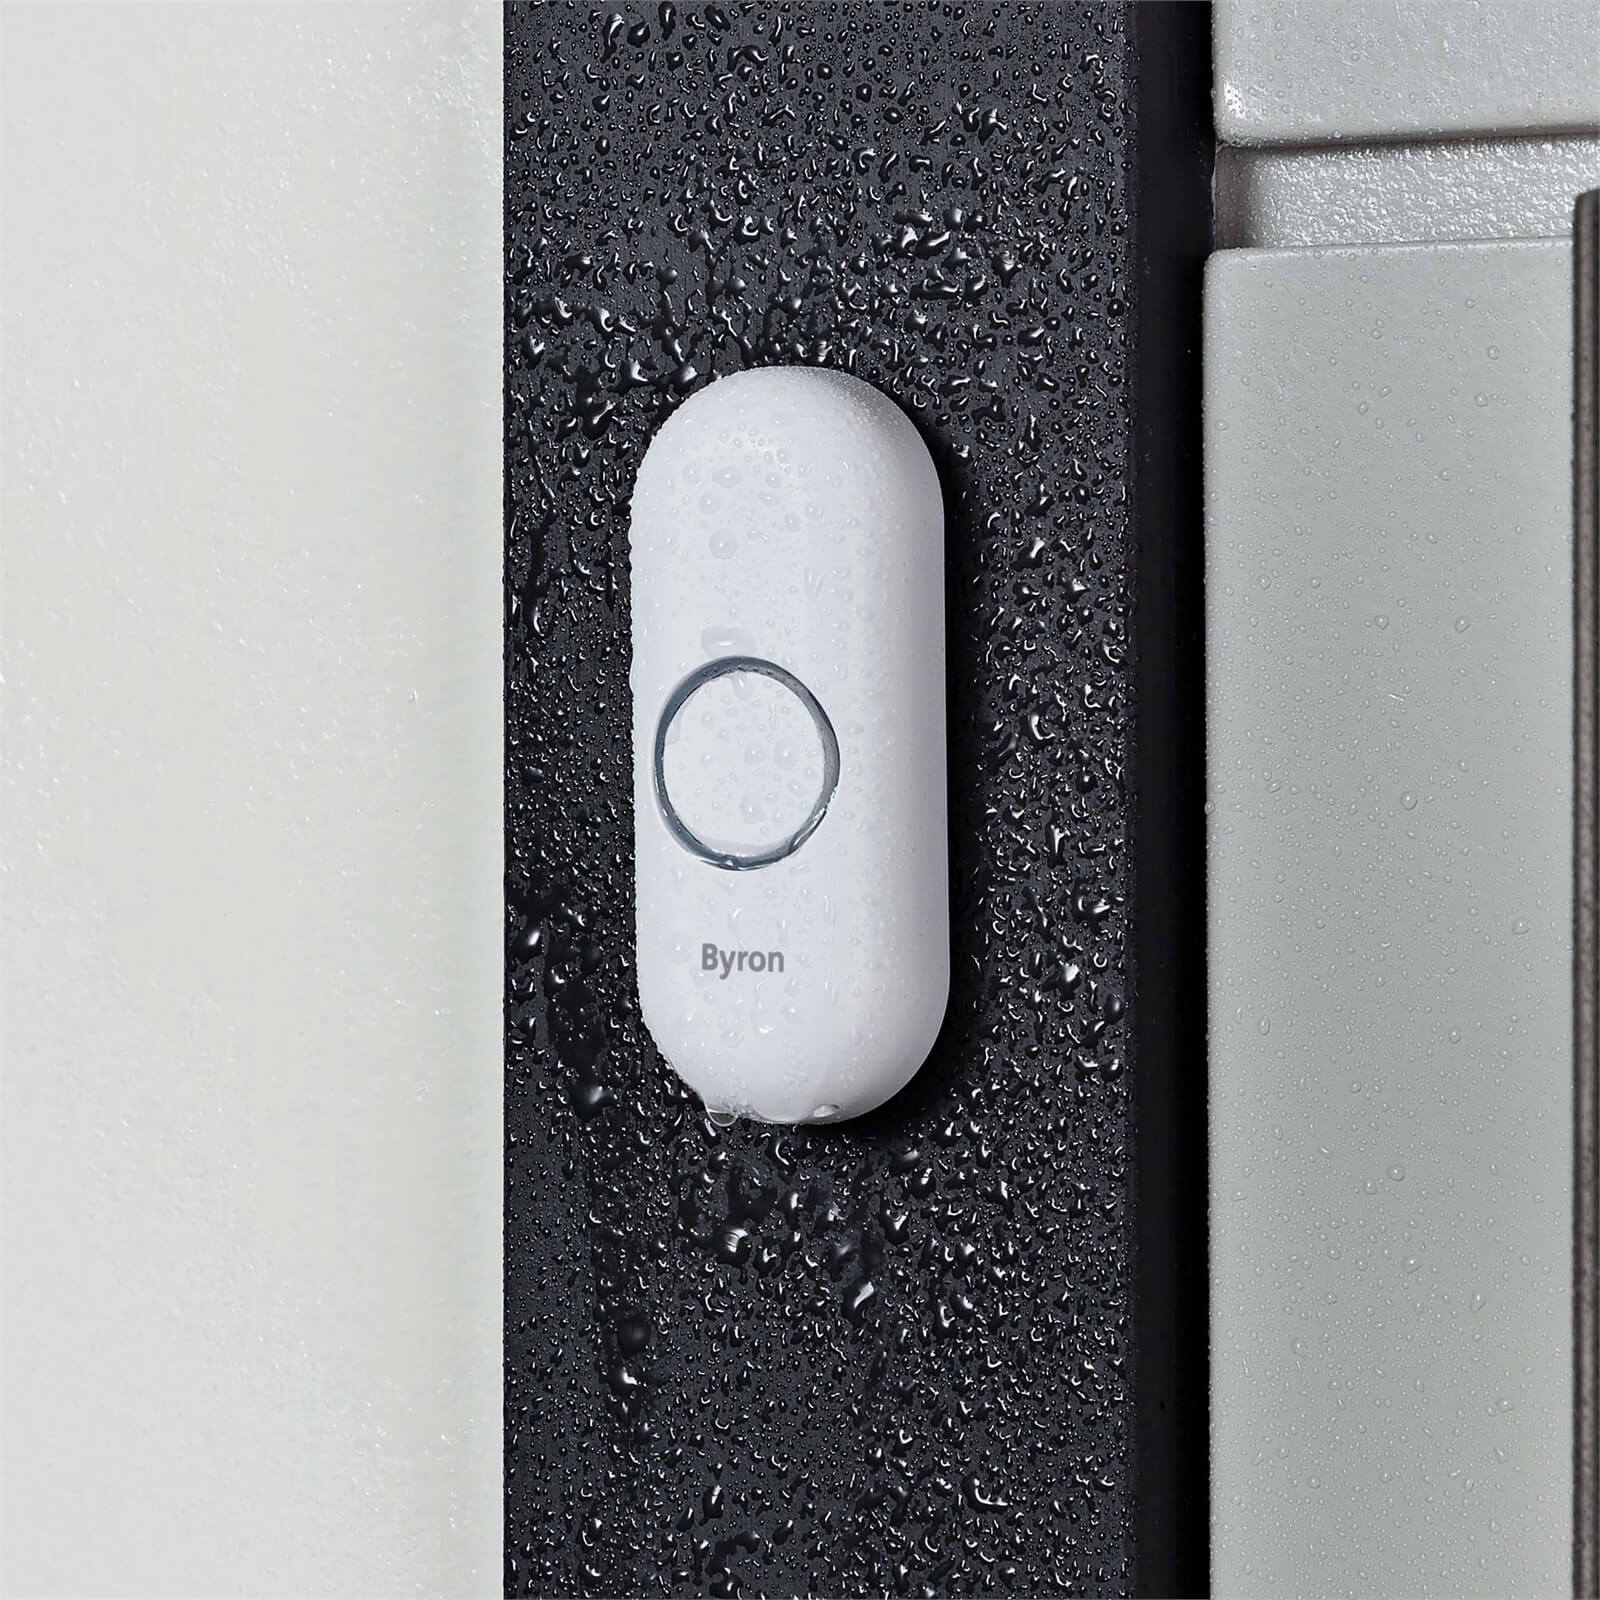 Byron 23522UK 175m Plug-in Wireless Doorbell set